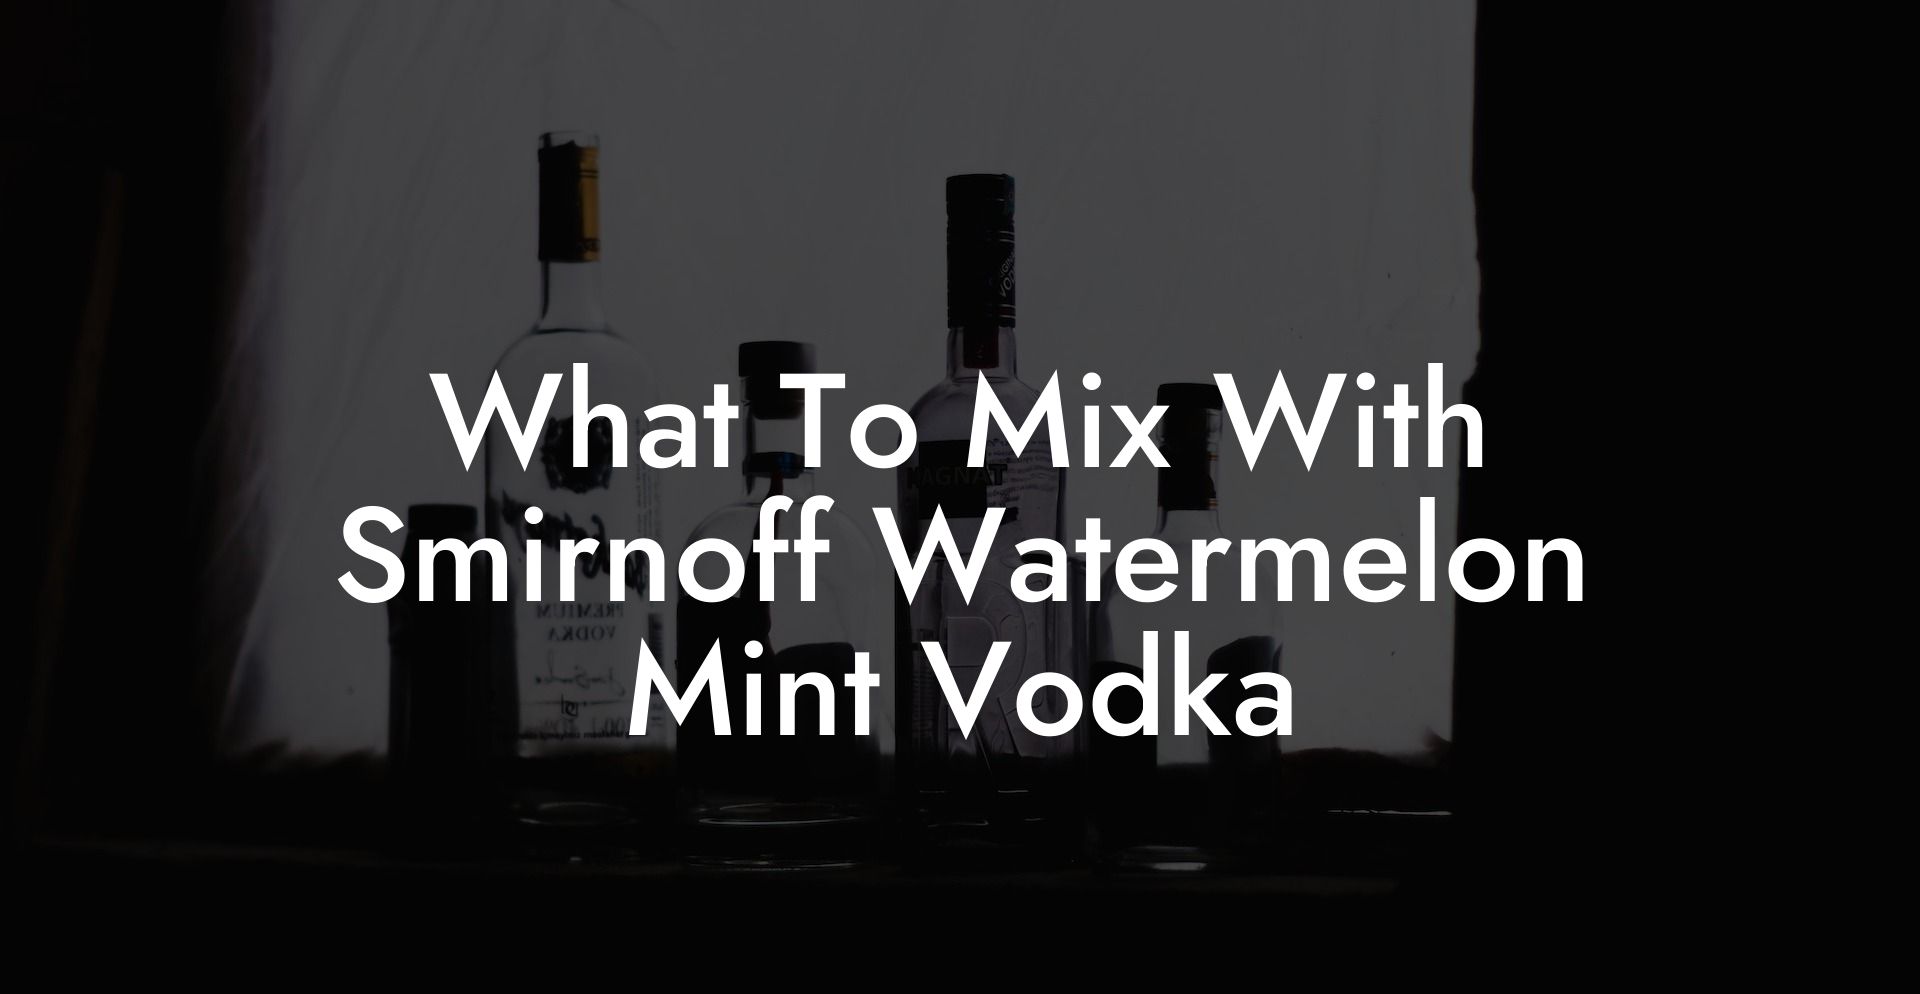 What To Mix With Smirnoff Watermelon Mint Vodka